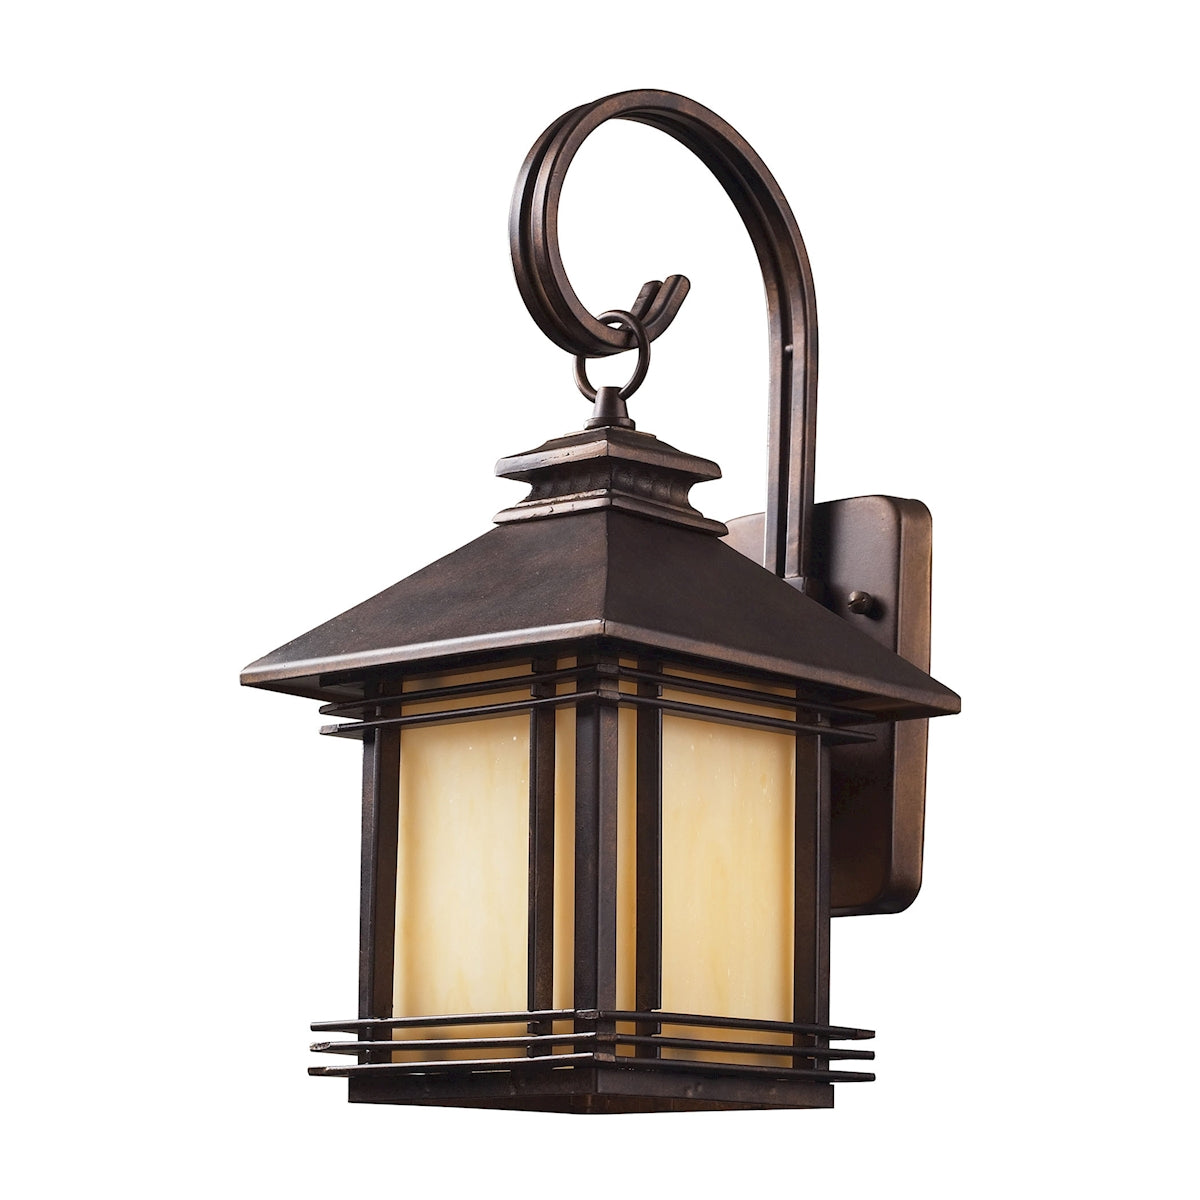 ELK Lighting 42100/1 Blackwell 1-Light Outdoor Wall Lantern in Hazelnut Bronze